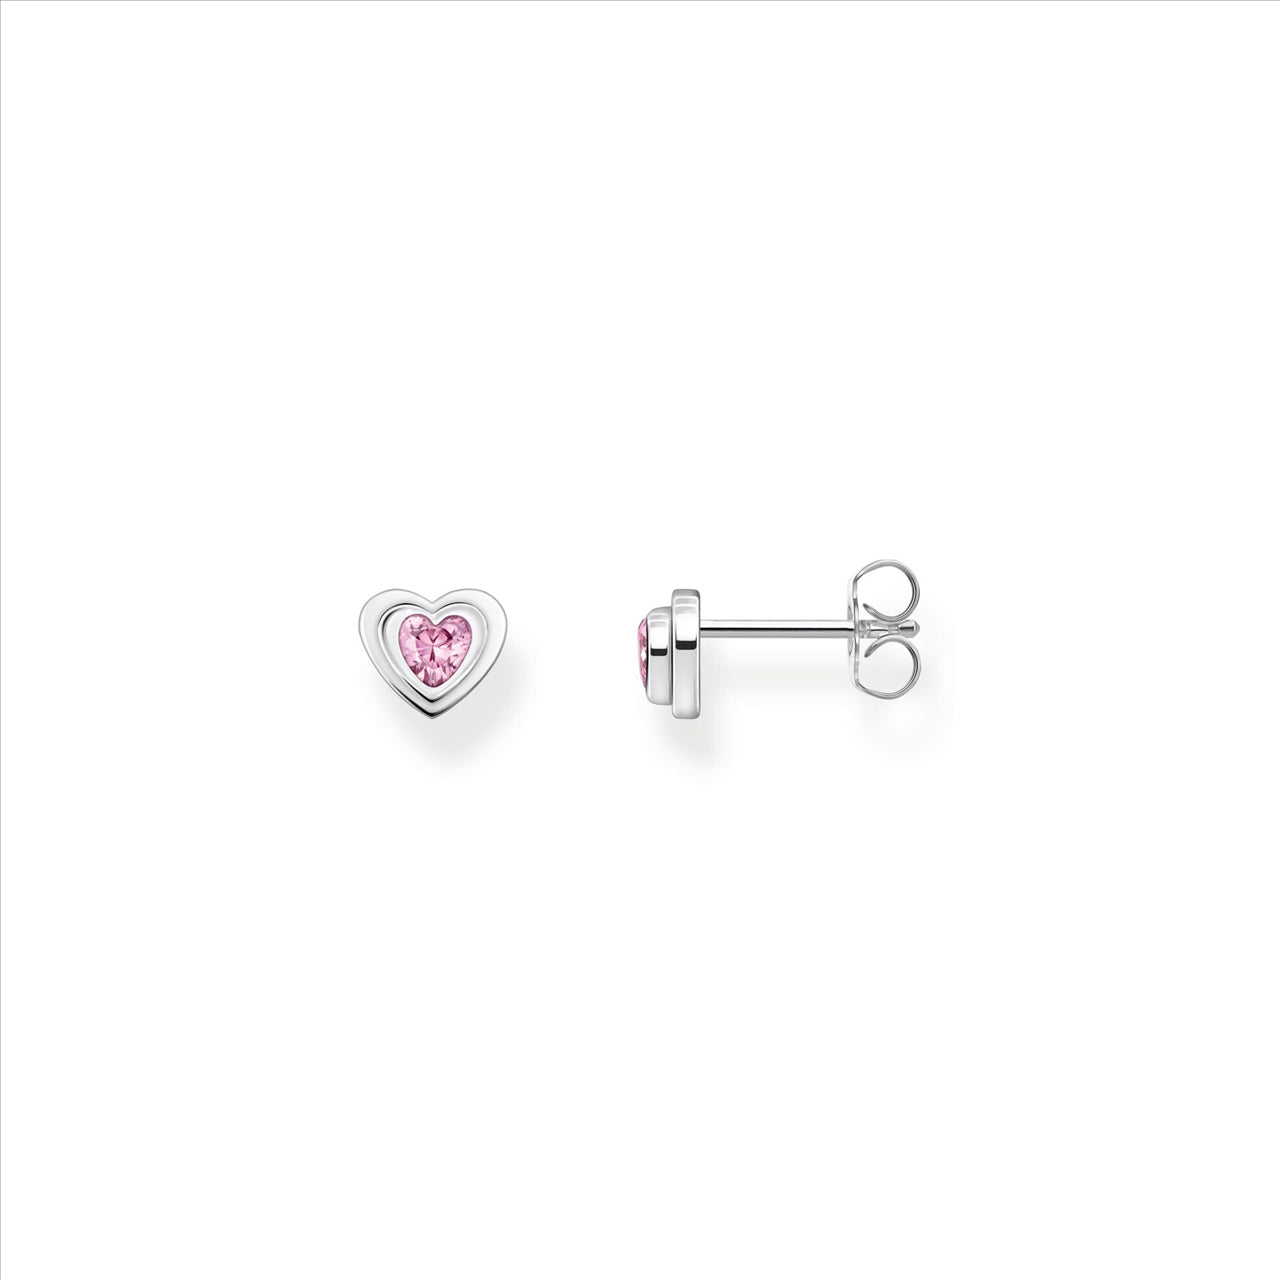 Pink Heart CZ Stud Earrings by Thomas Sabo